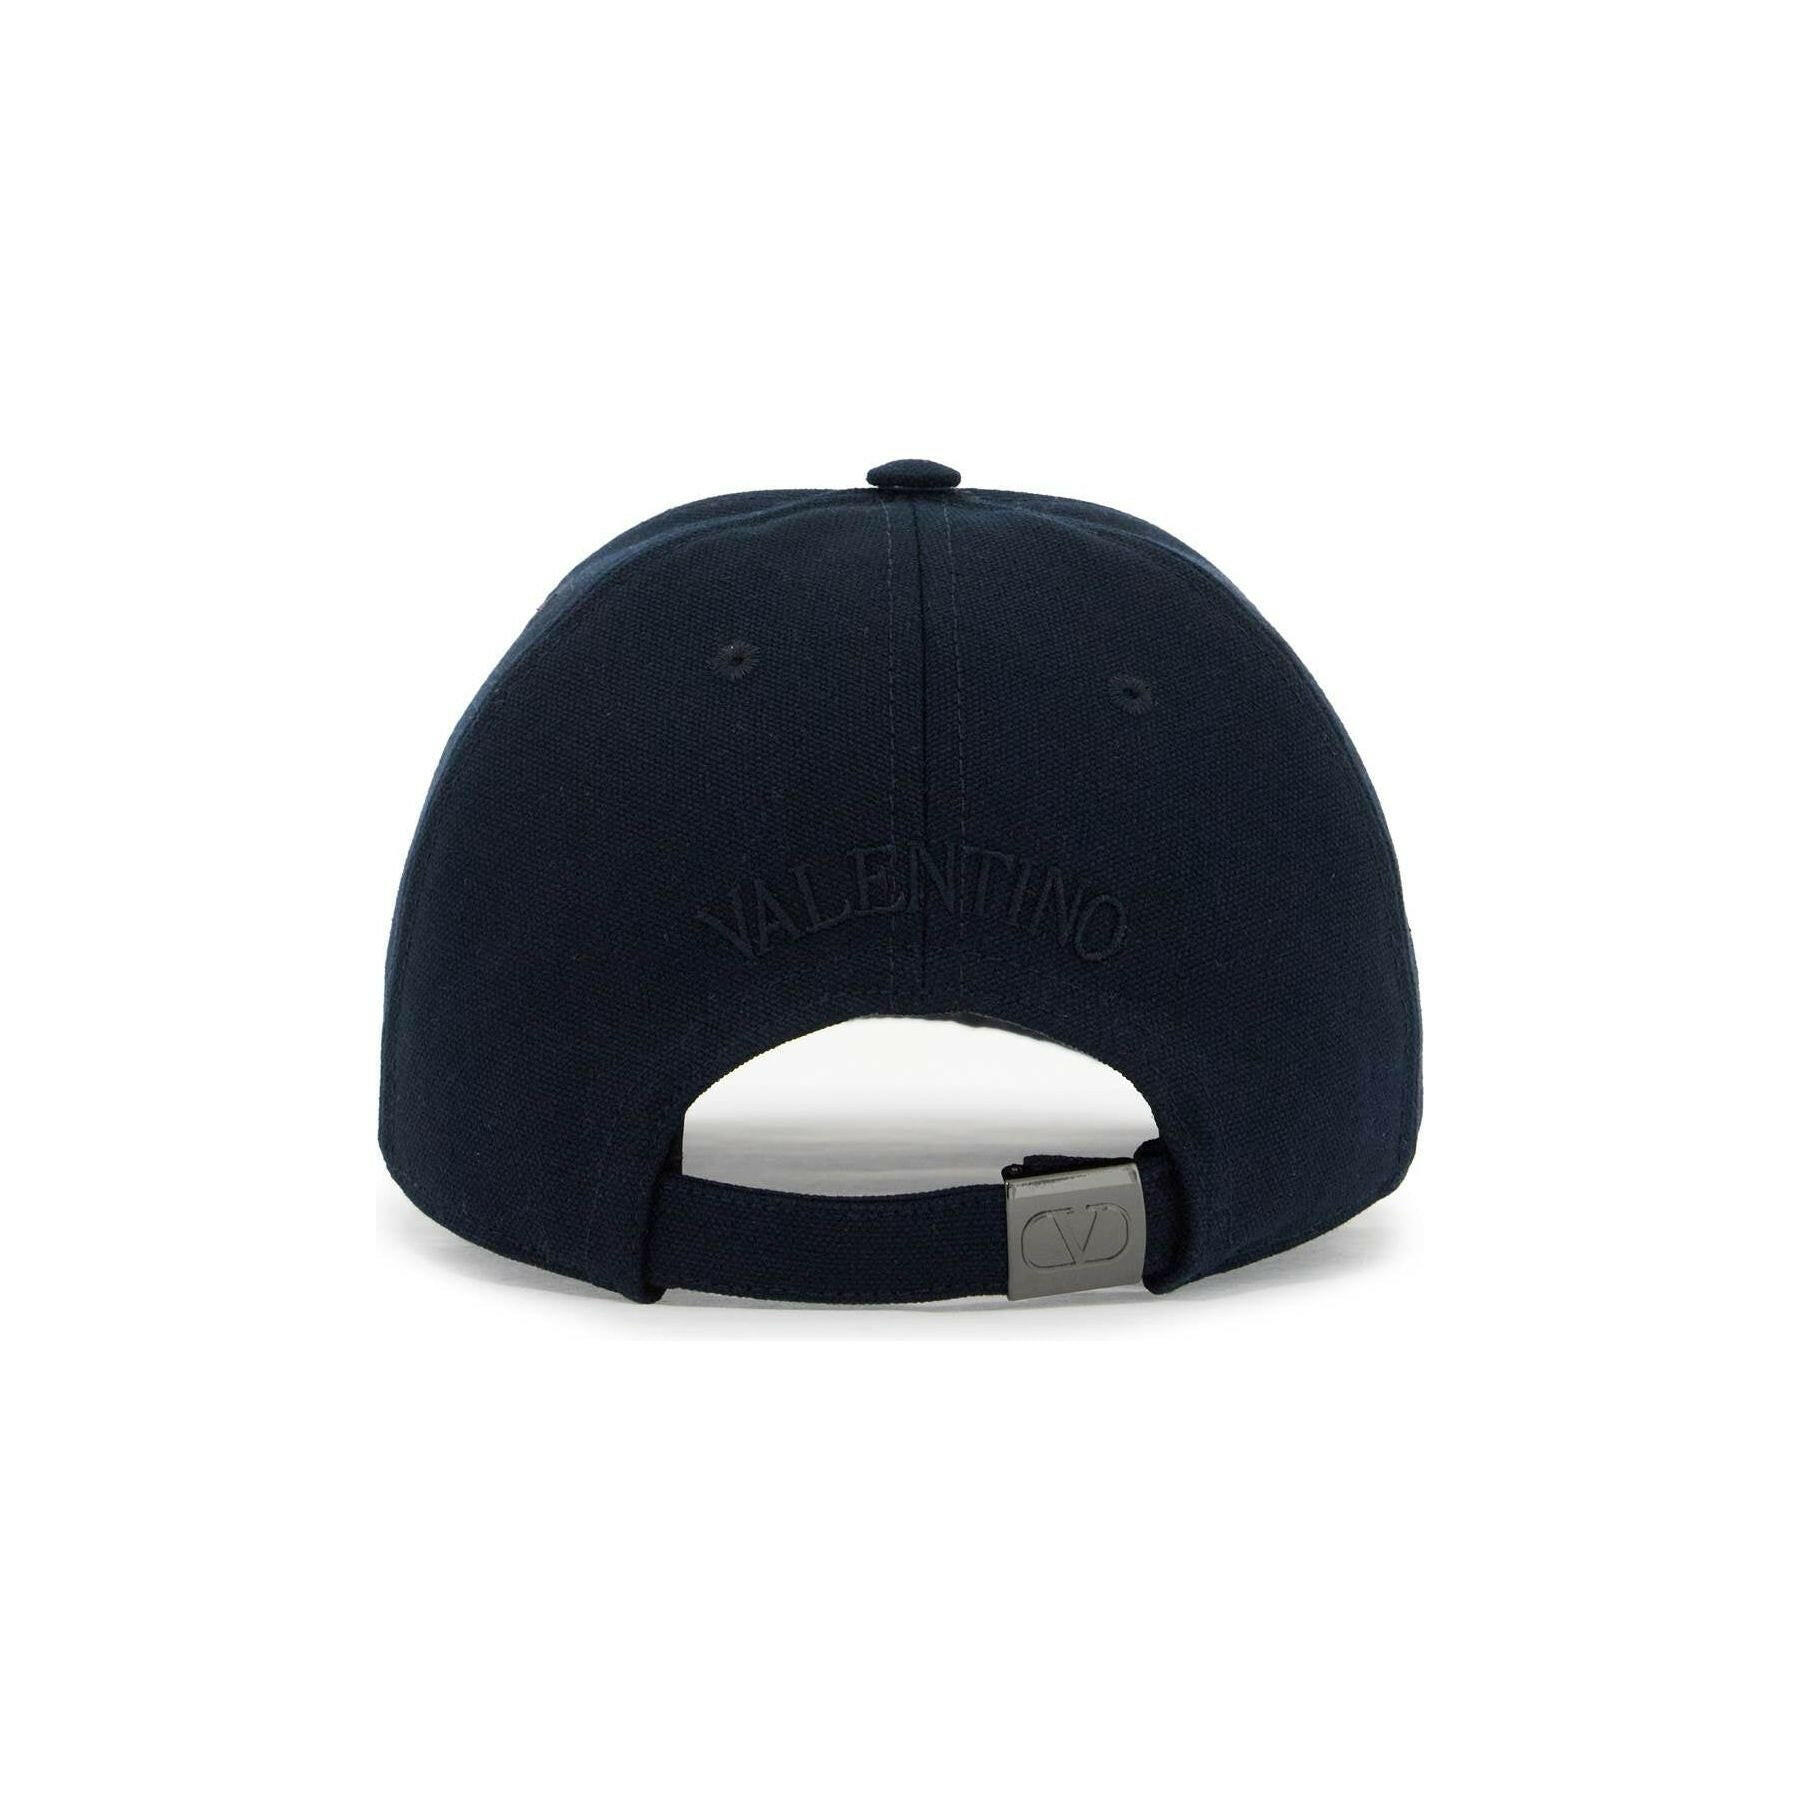 Toile Iconographe Baseball Cap.